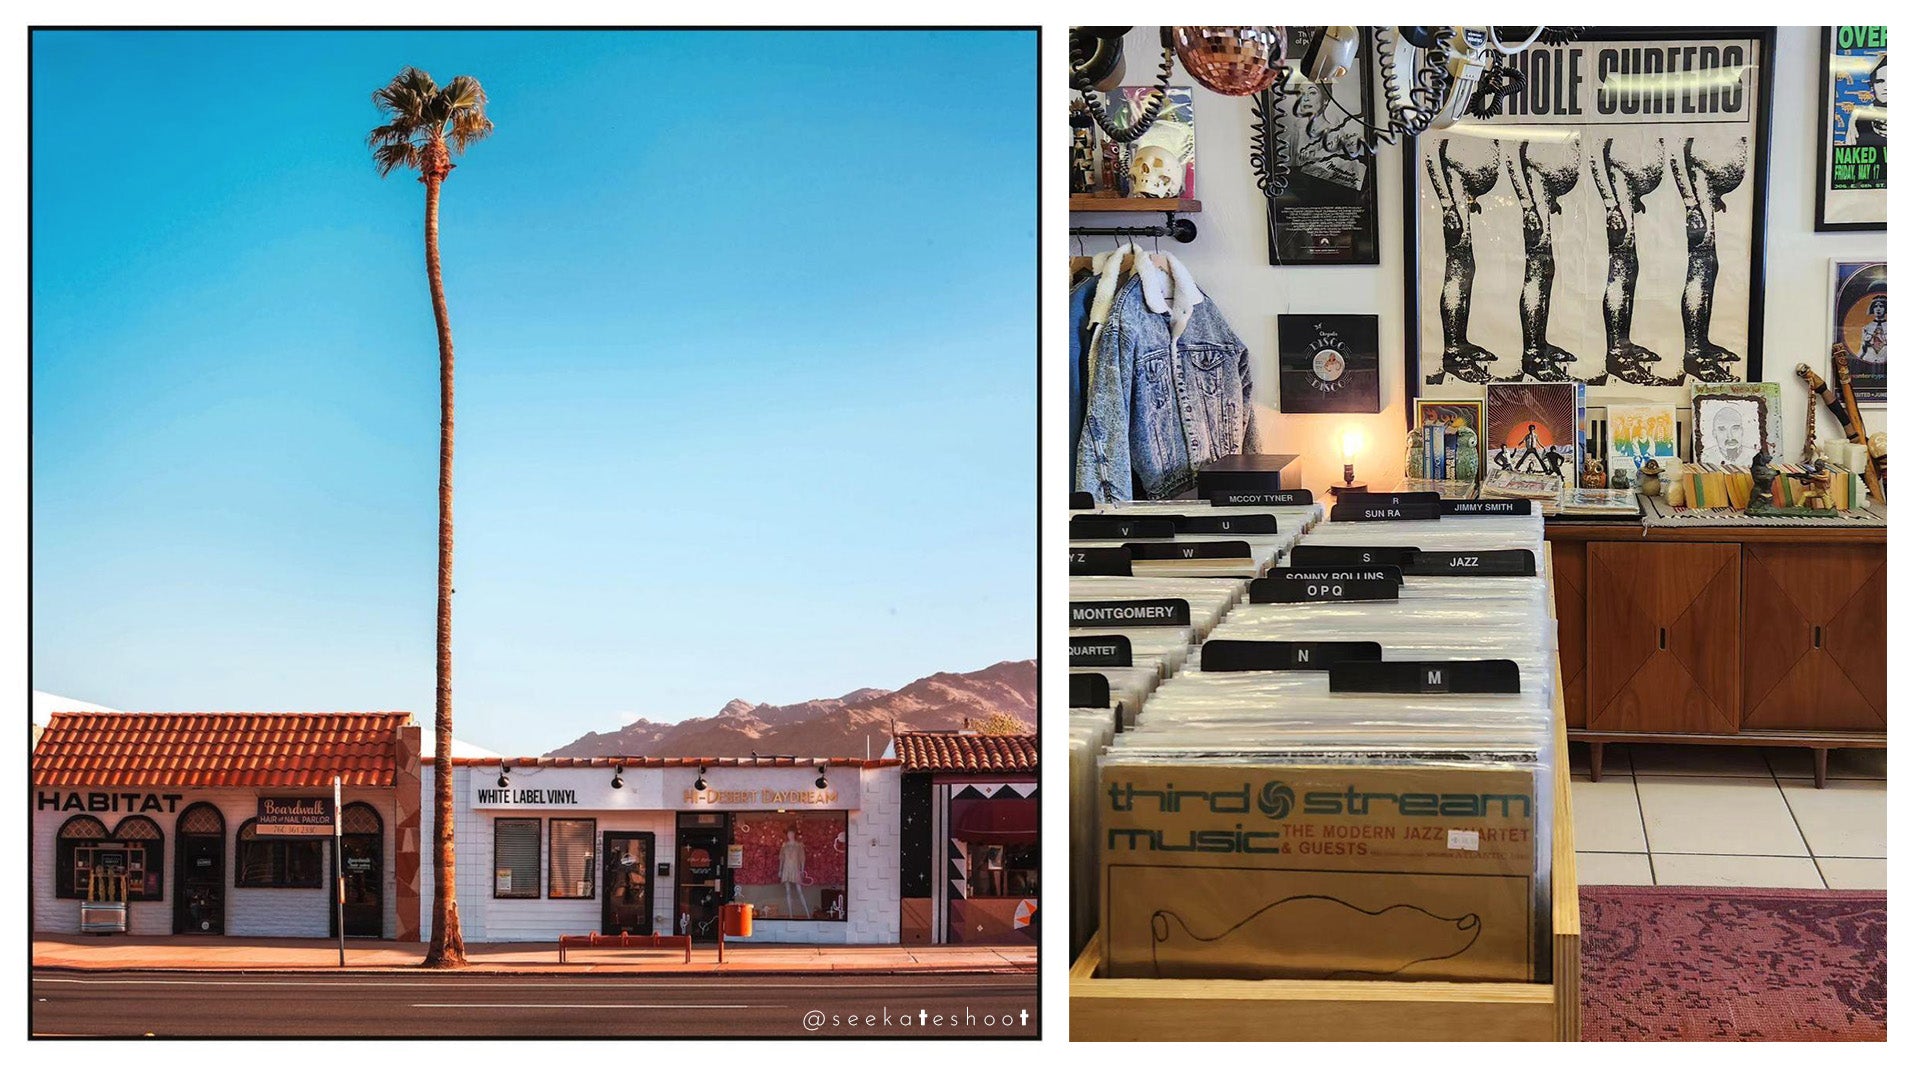 white label vinyl record store in twentynine palms, california